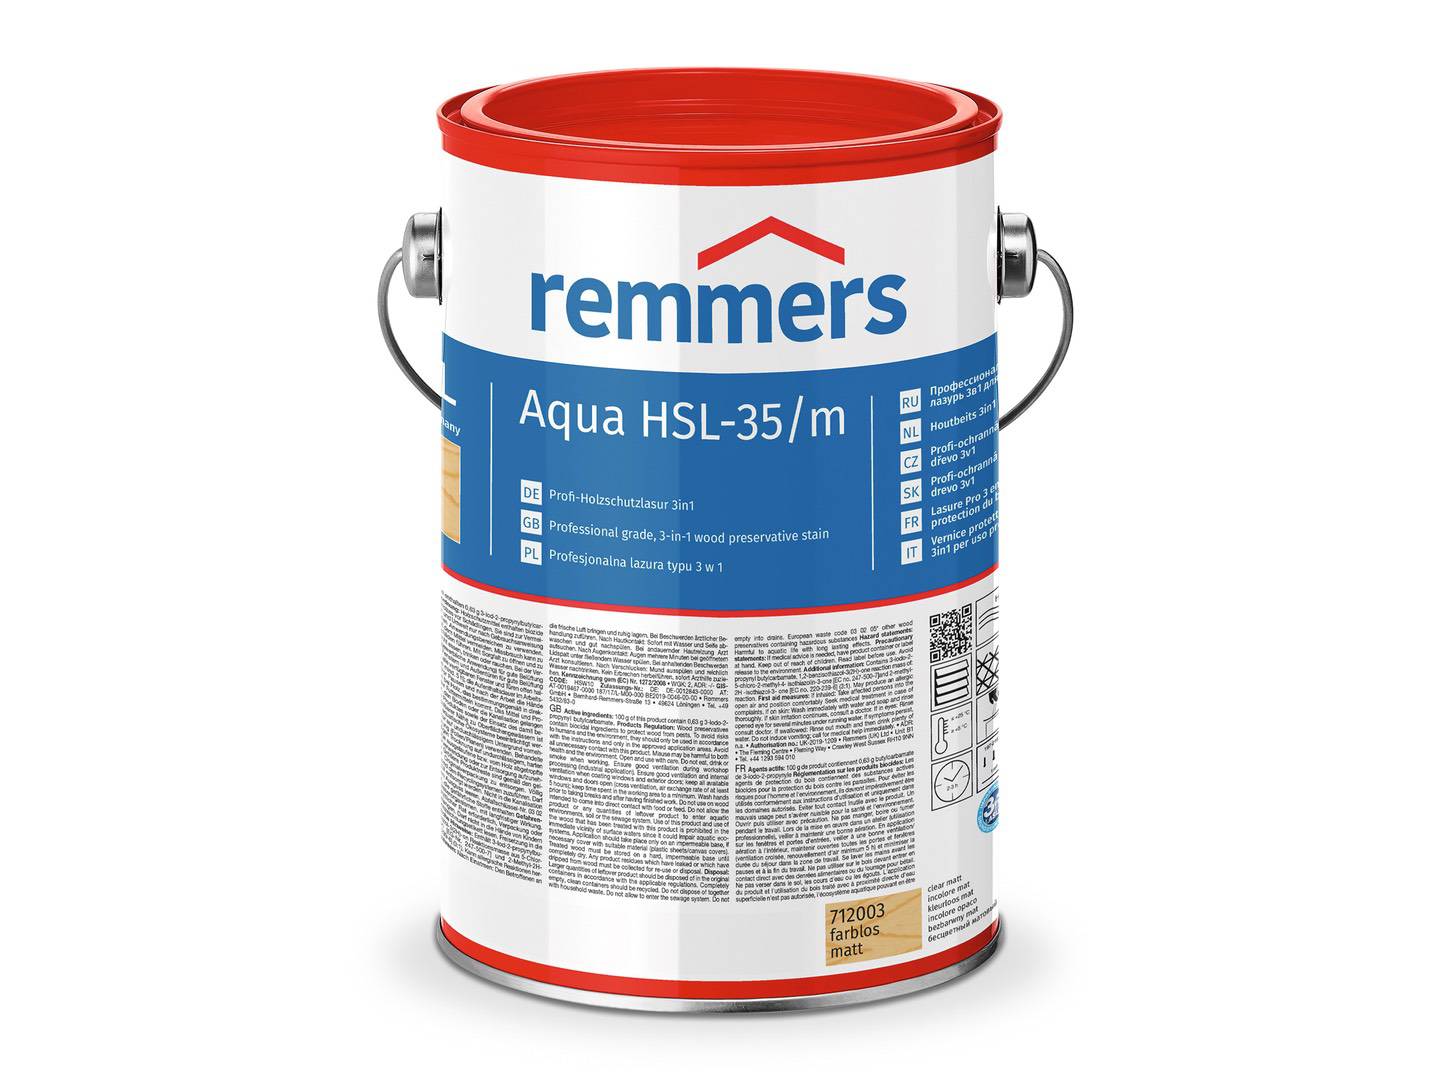 REMMERS Aqua HSL-35/m-Profi-Holzschutz-Lasur 3in1 silbergrau (RC-970) 2,50 l